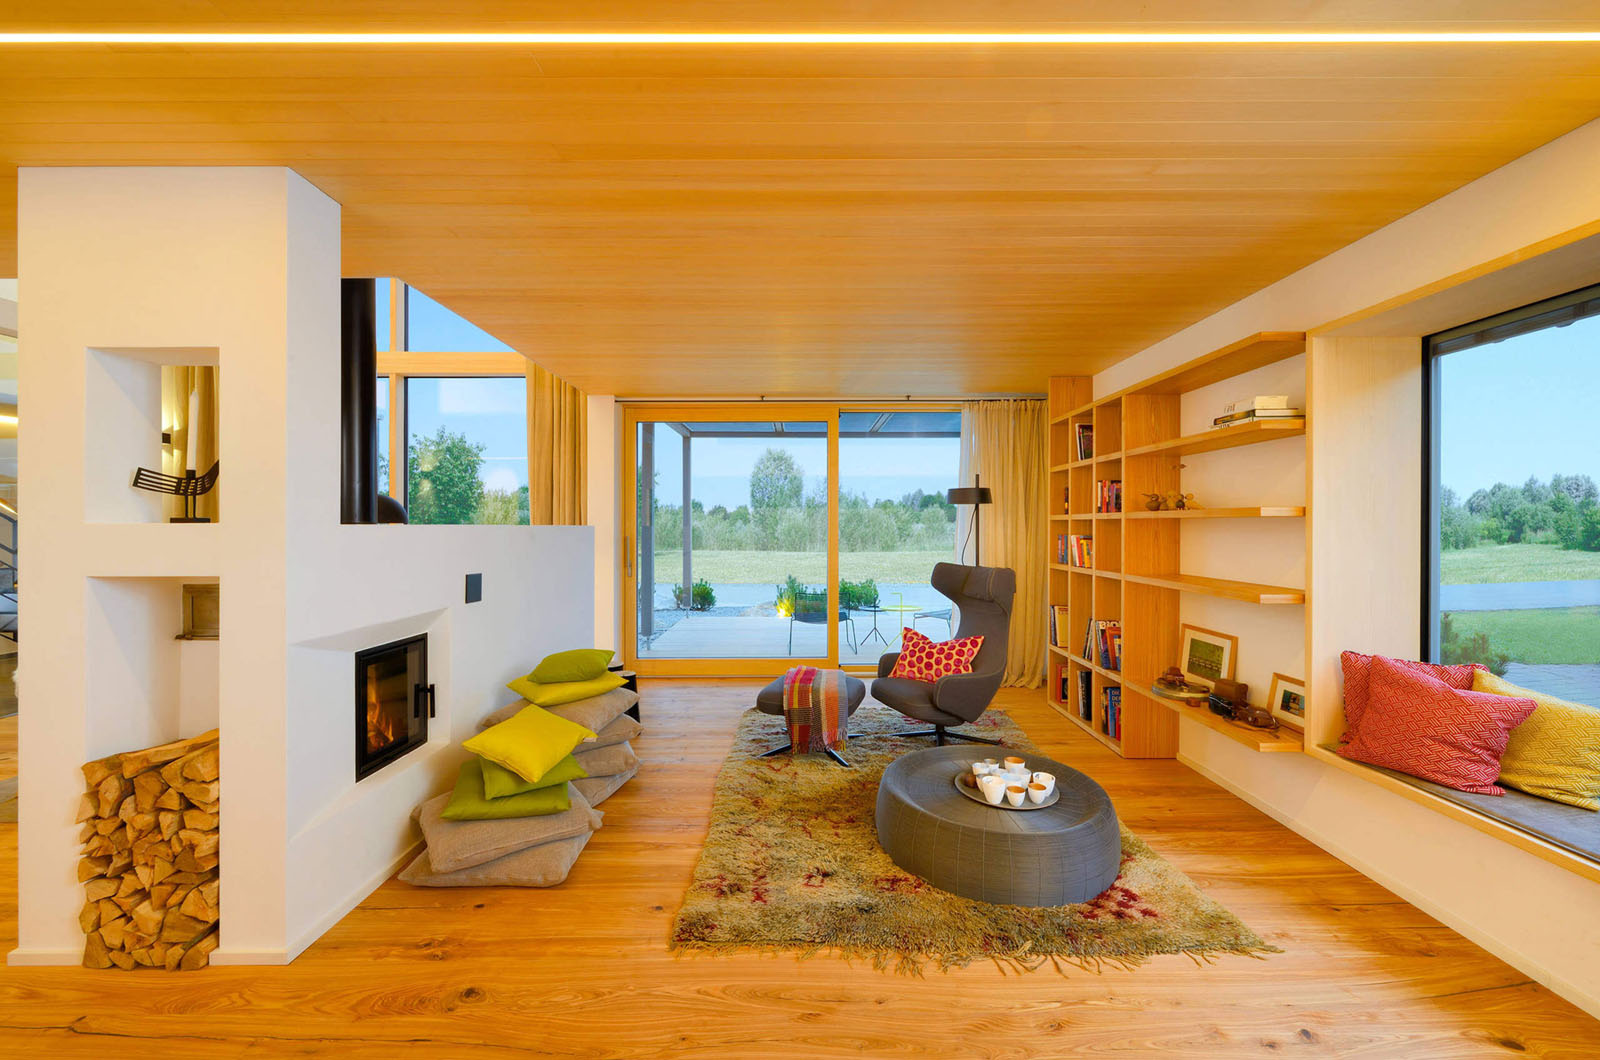 Bauhaus Inspired Energy Saving House With Modern Alpine ...
